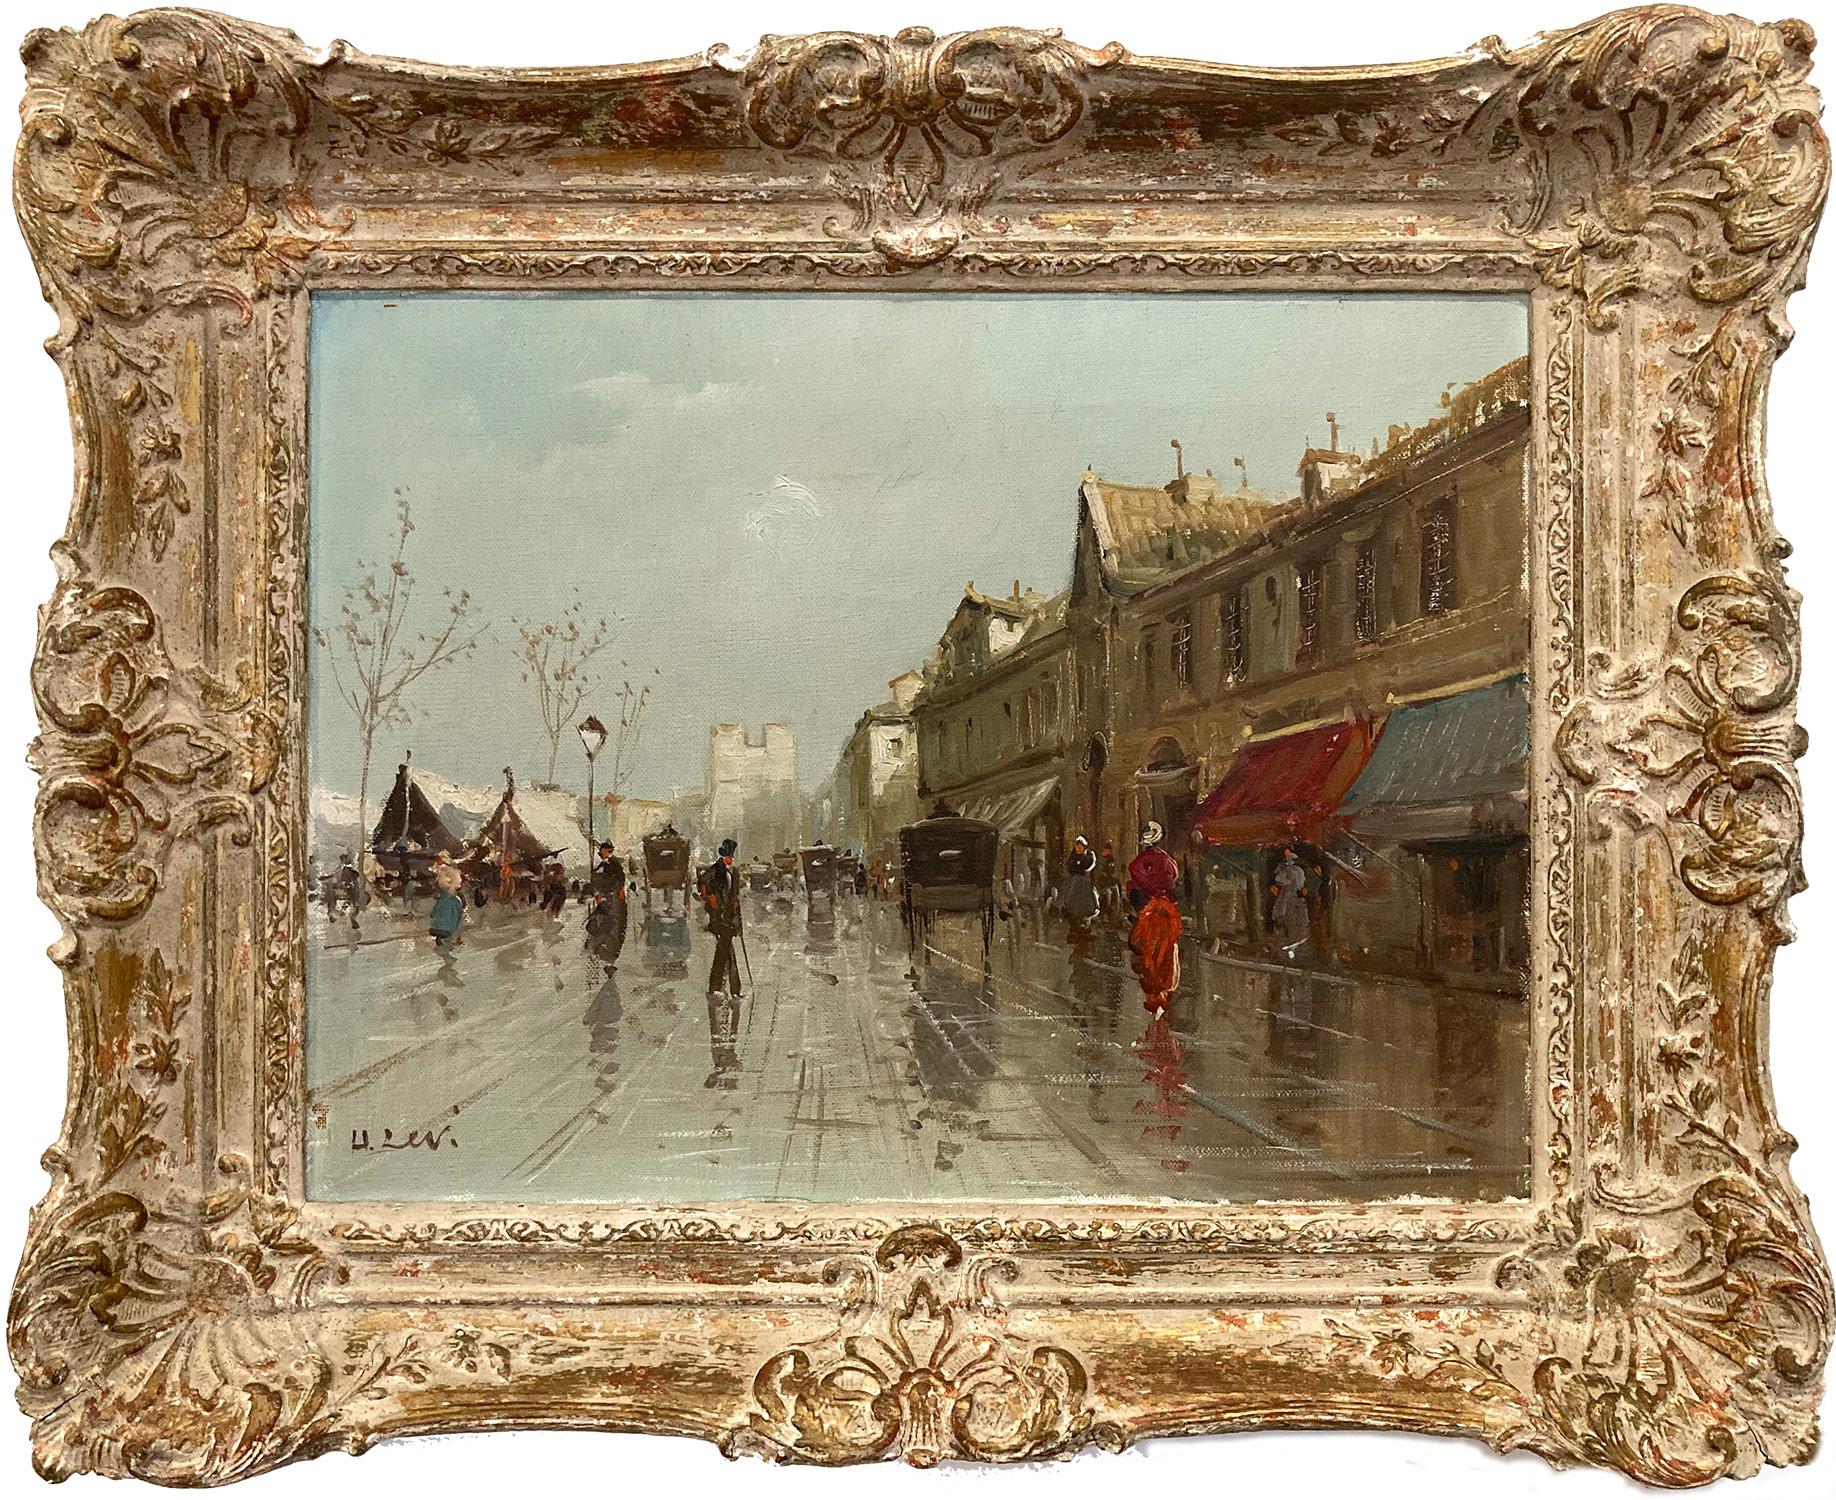 H. Levi  Figurative Painting - "Notre Dam Parisian Street Scene" Post-Impressionist Oil Paint on Canvas